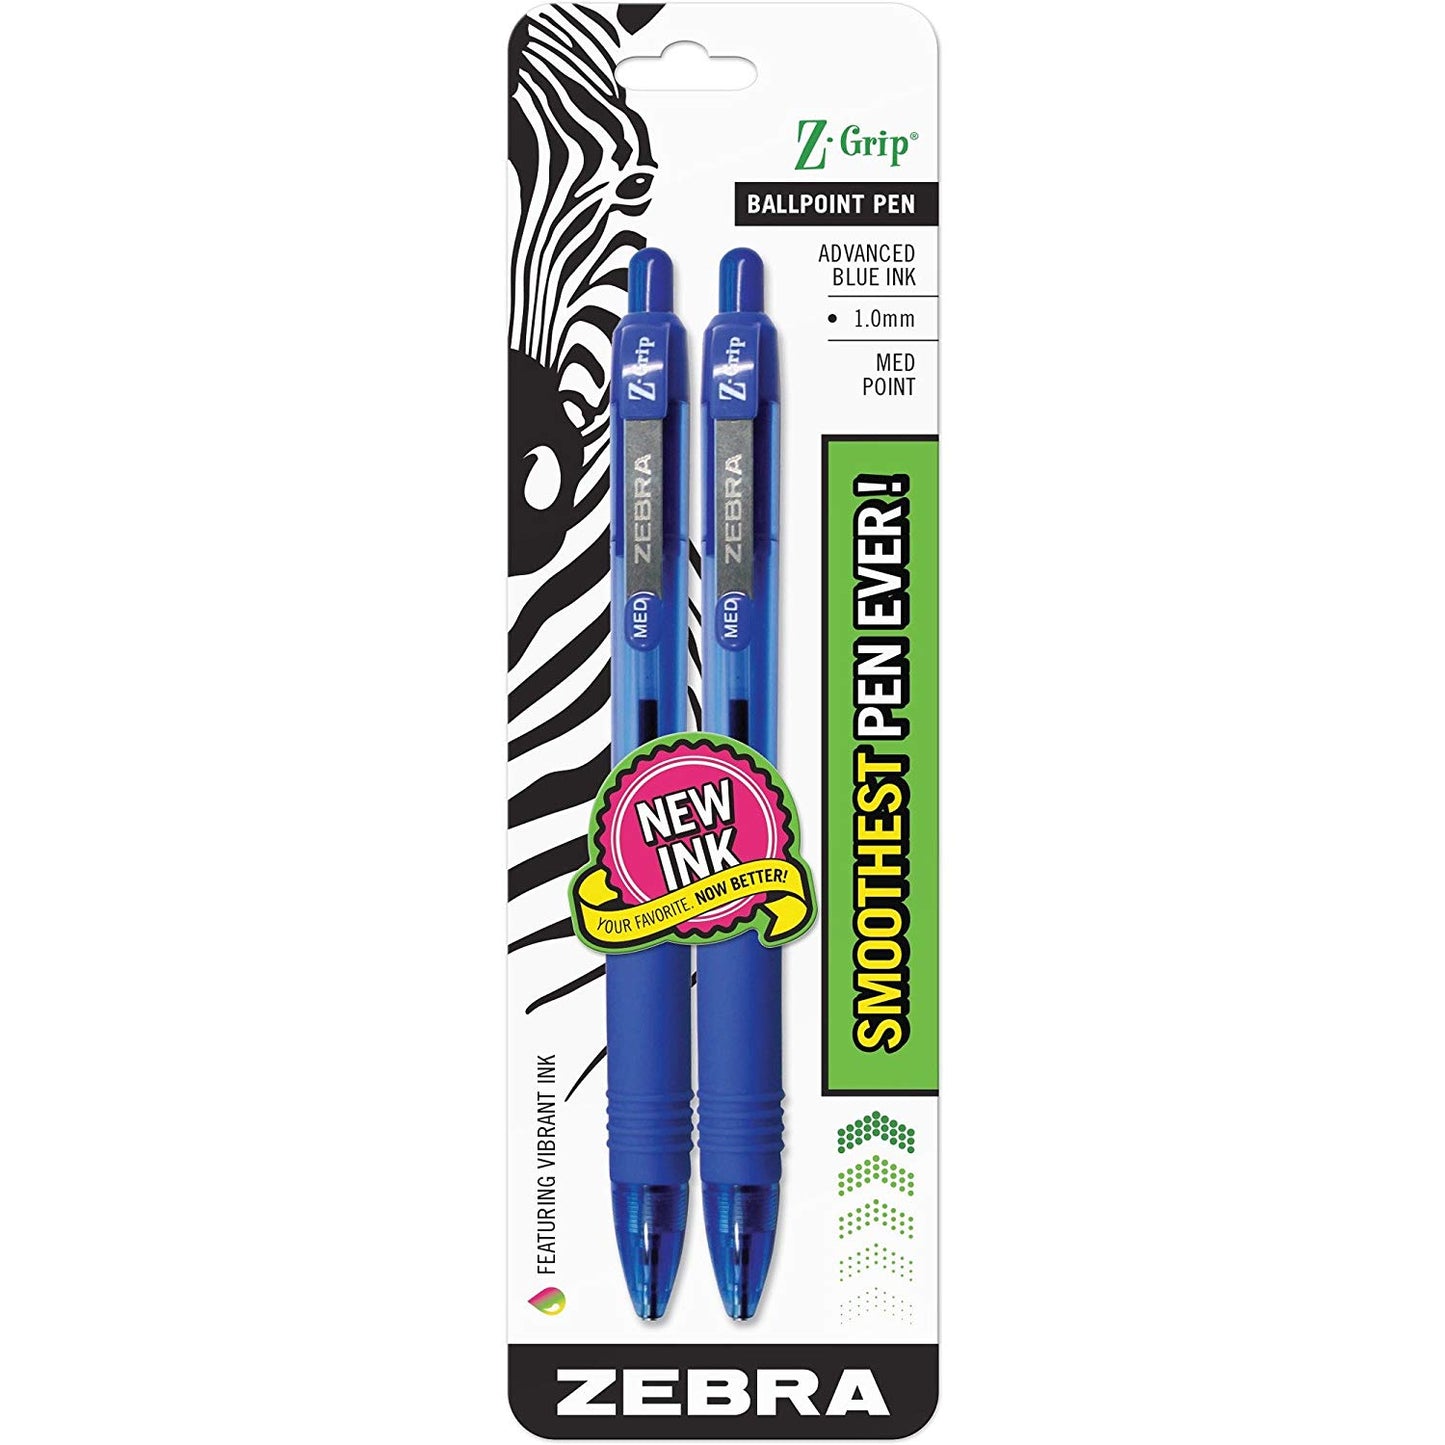 2 pcs Z-Grip Ballpoint Pen Advanced Blue Ink Latex-free rubber grip - Zebra Pen